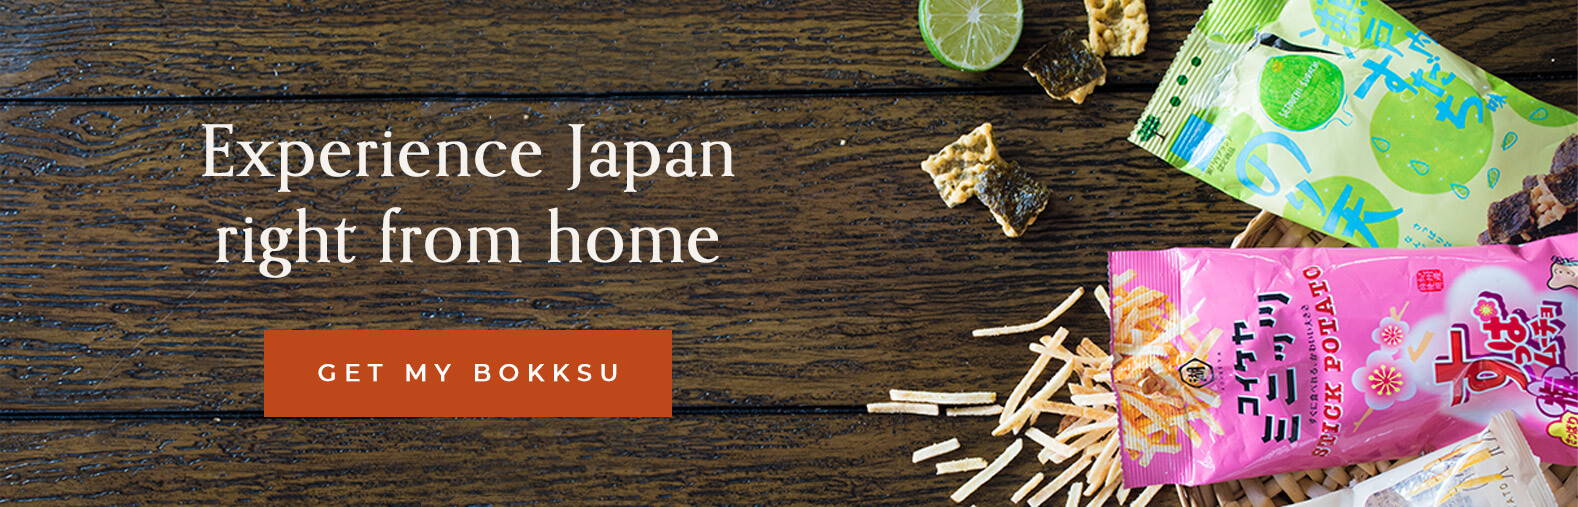 join bokksu japanese snack subscription box service